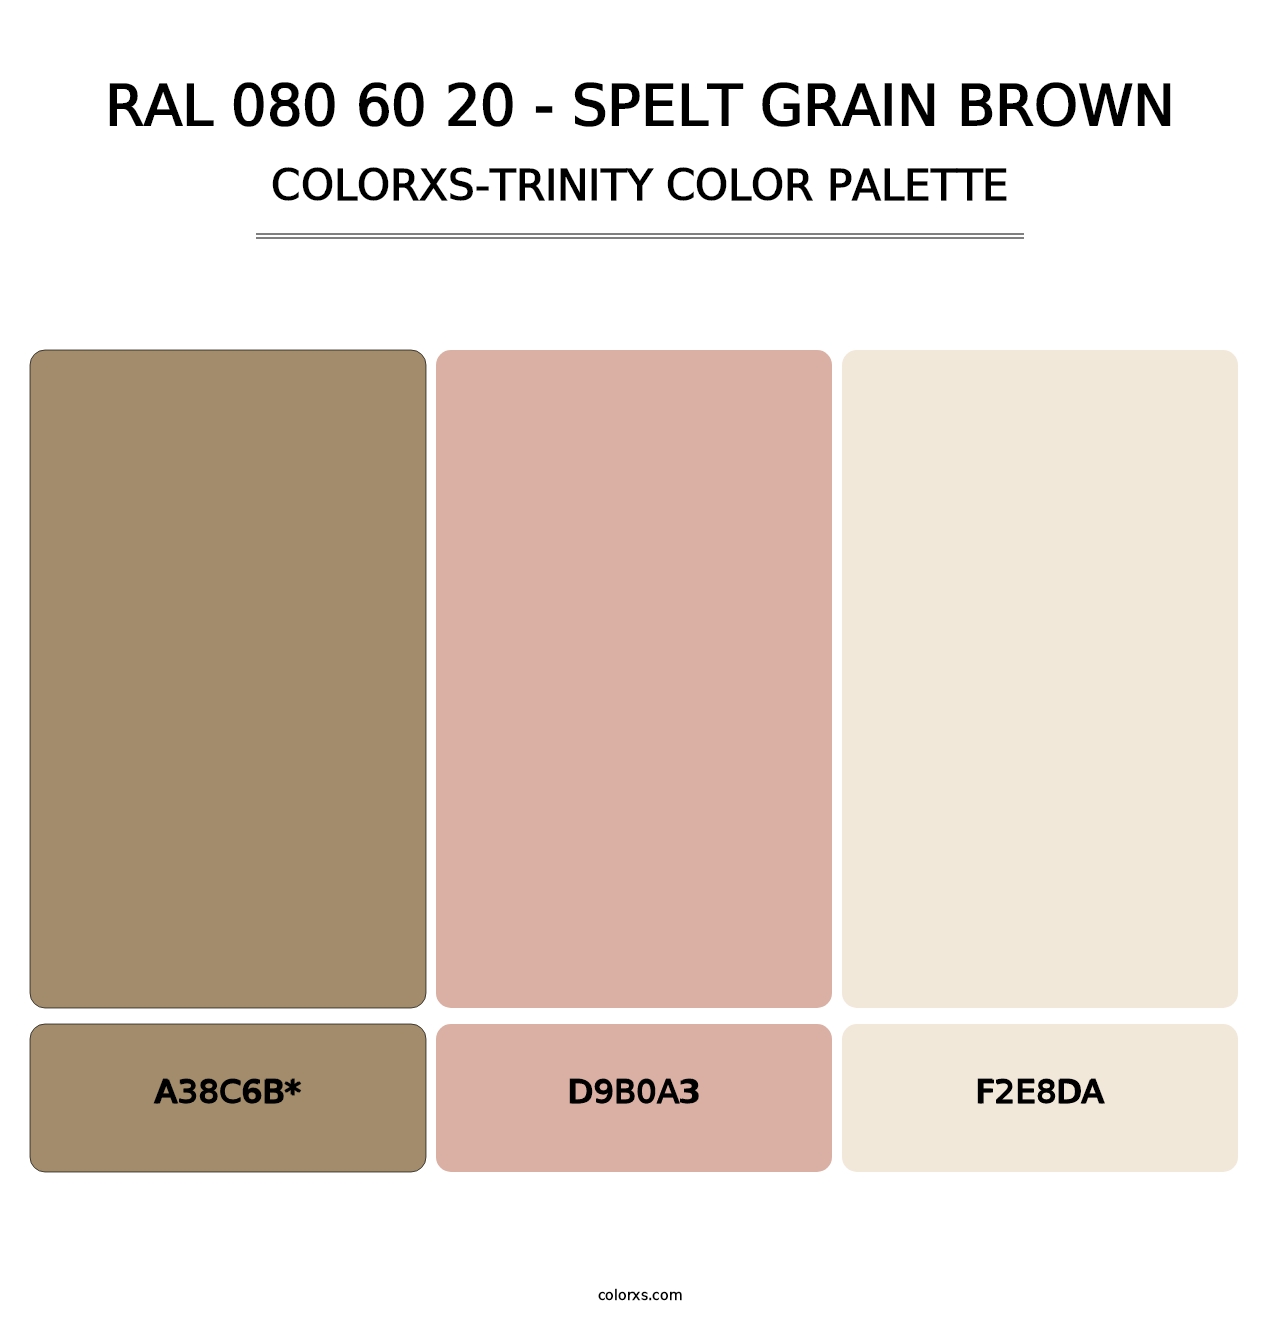 RAL 080 60 20 - Spelt Grain Brown - Colorxs Trinity Palette